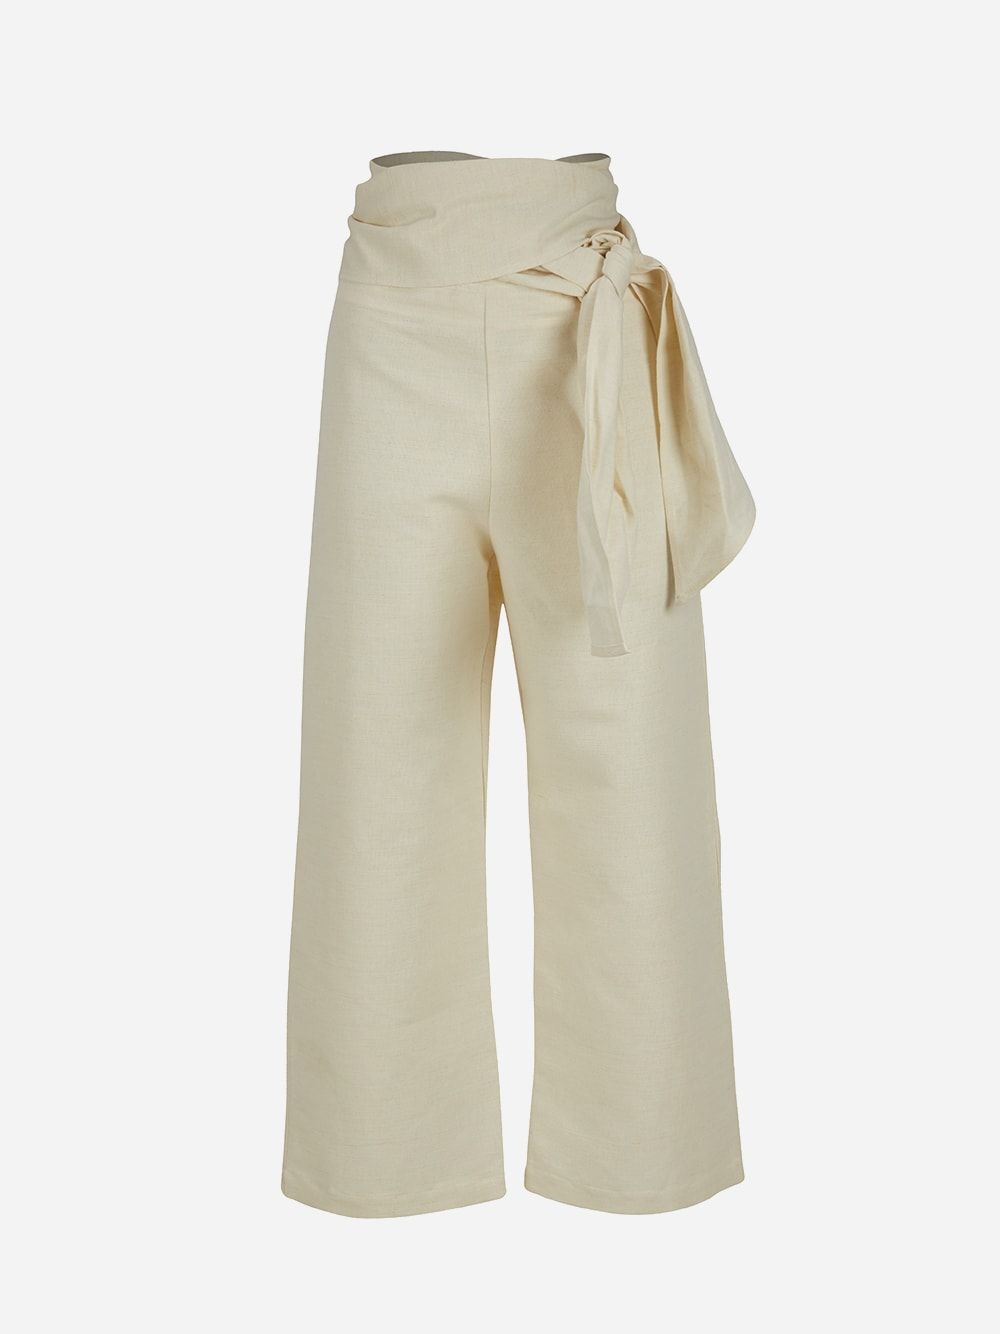 Linen Pants with Belt | On Atlas